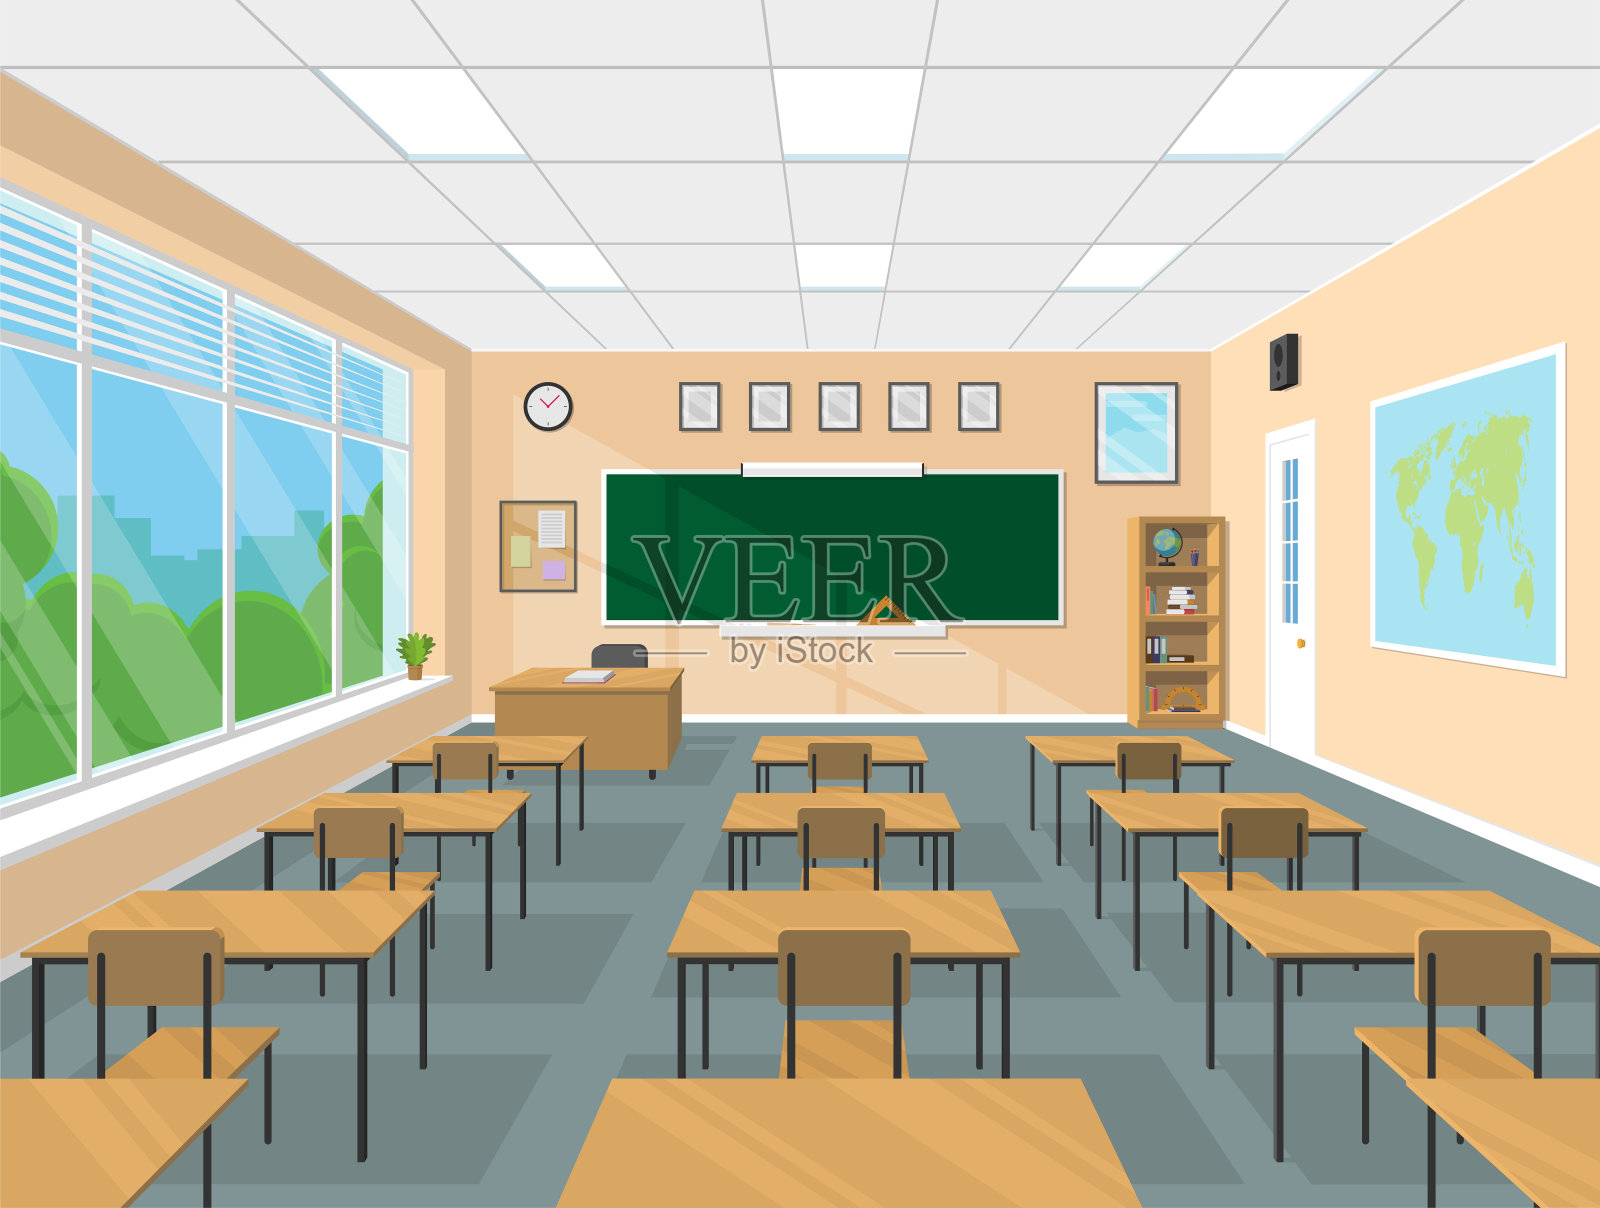 Ð教室内部备有黑板、教师桌子、课桌、学习用品。学校与大学的教育理念。平面设计矢量图插画图片素材